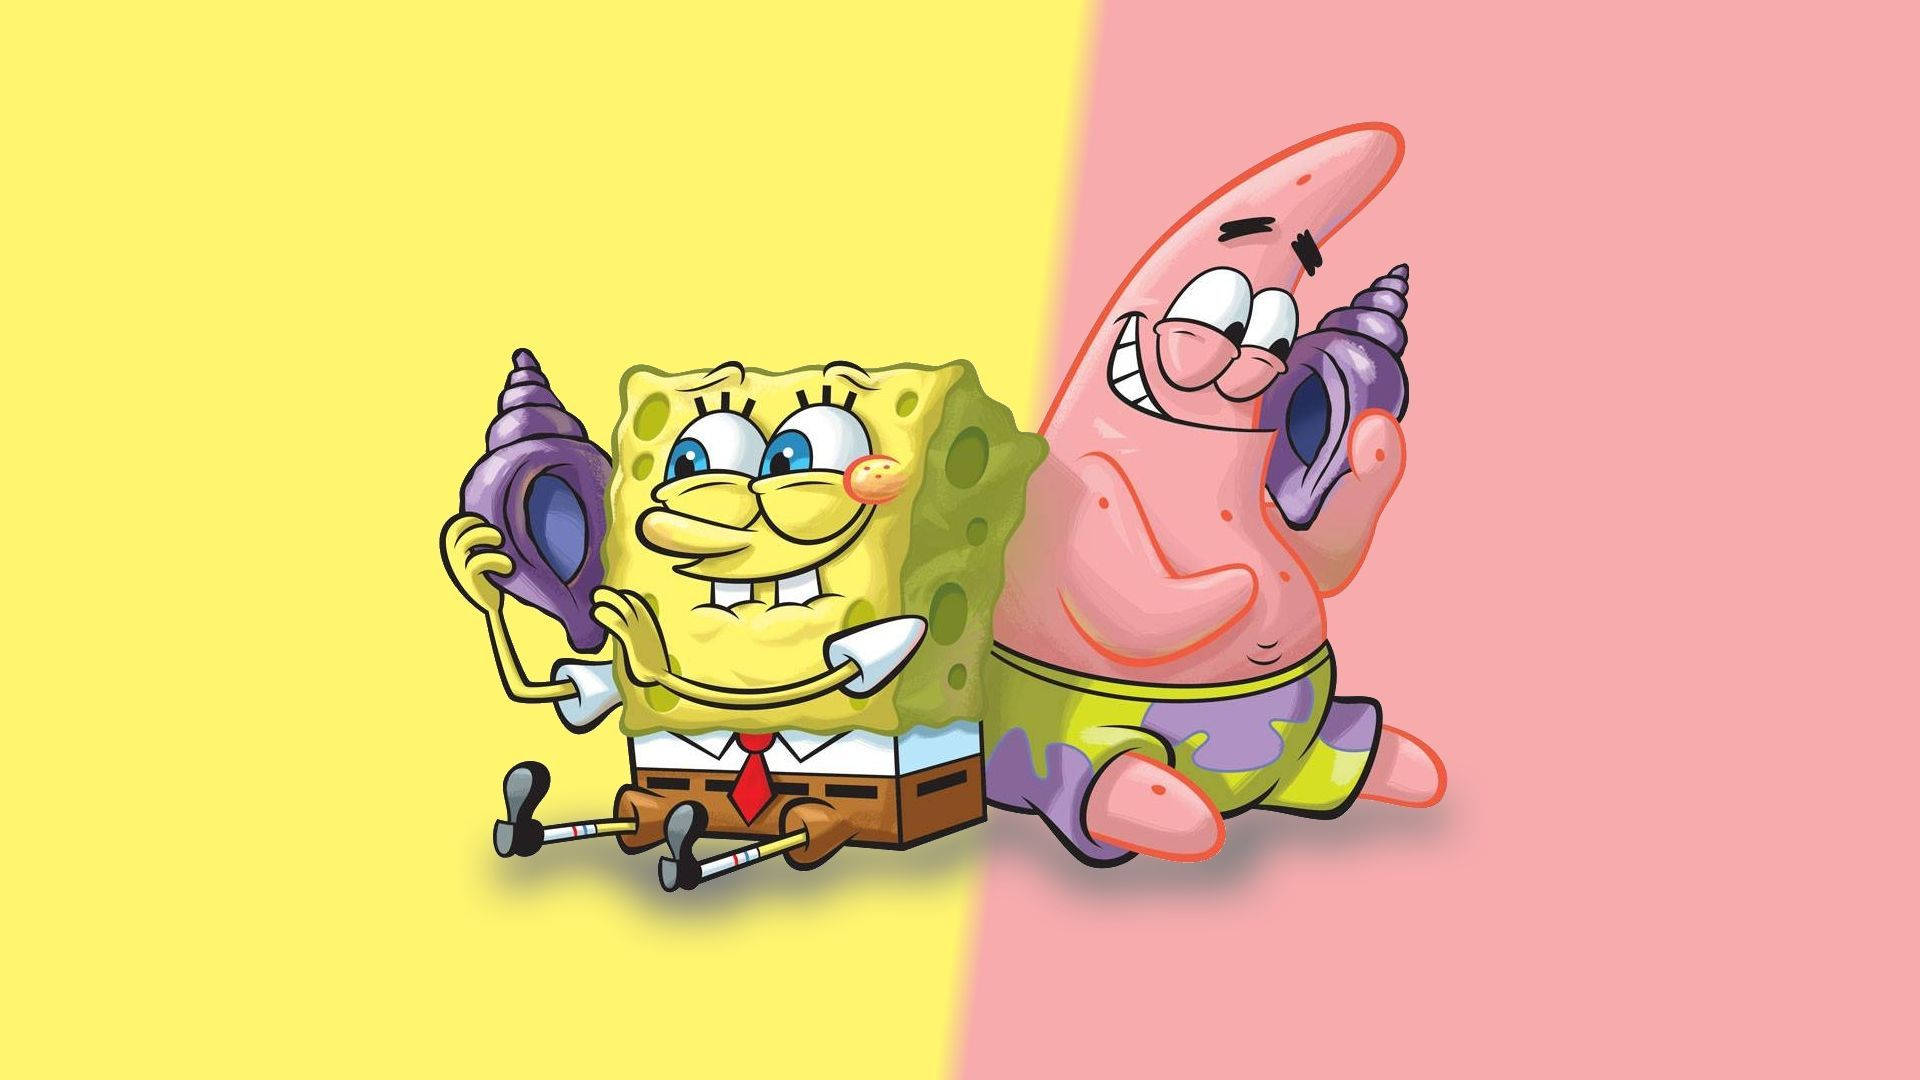 angry spongebob and patrick